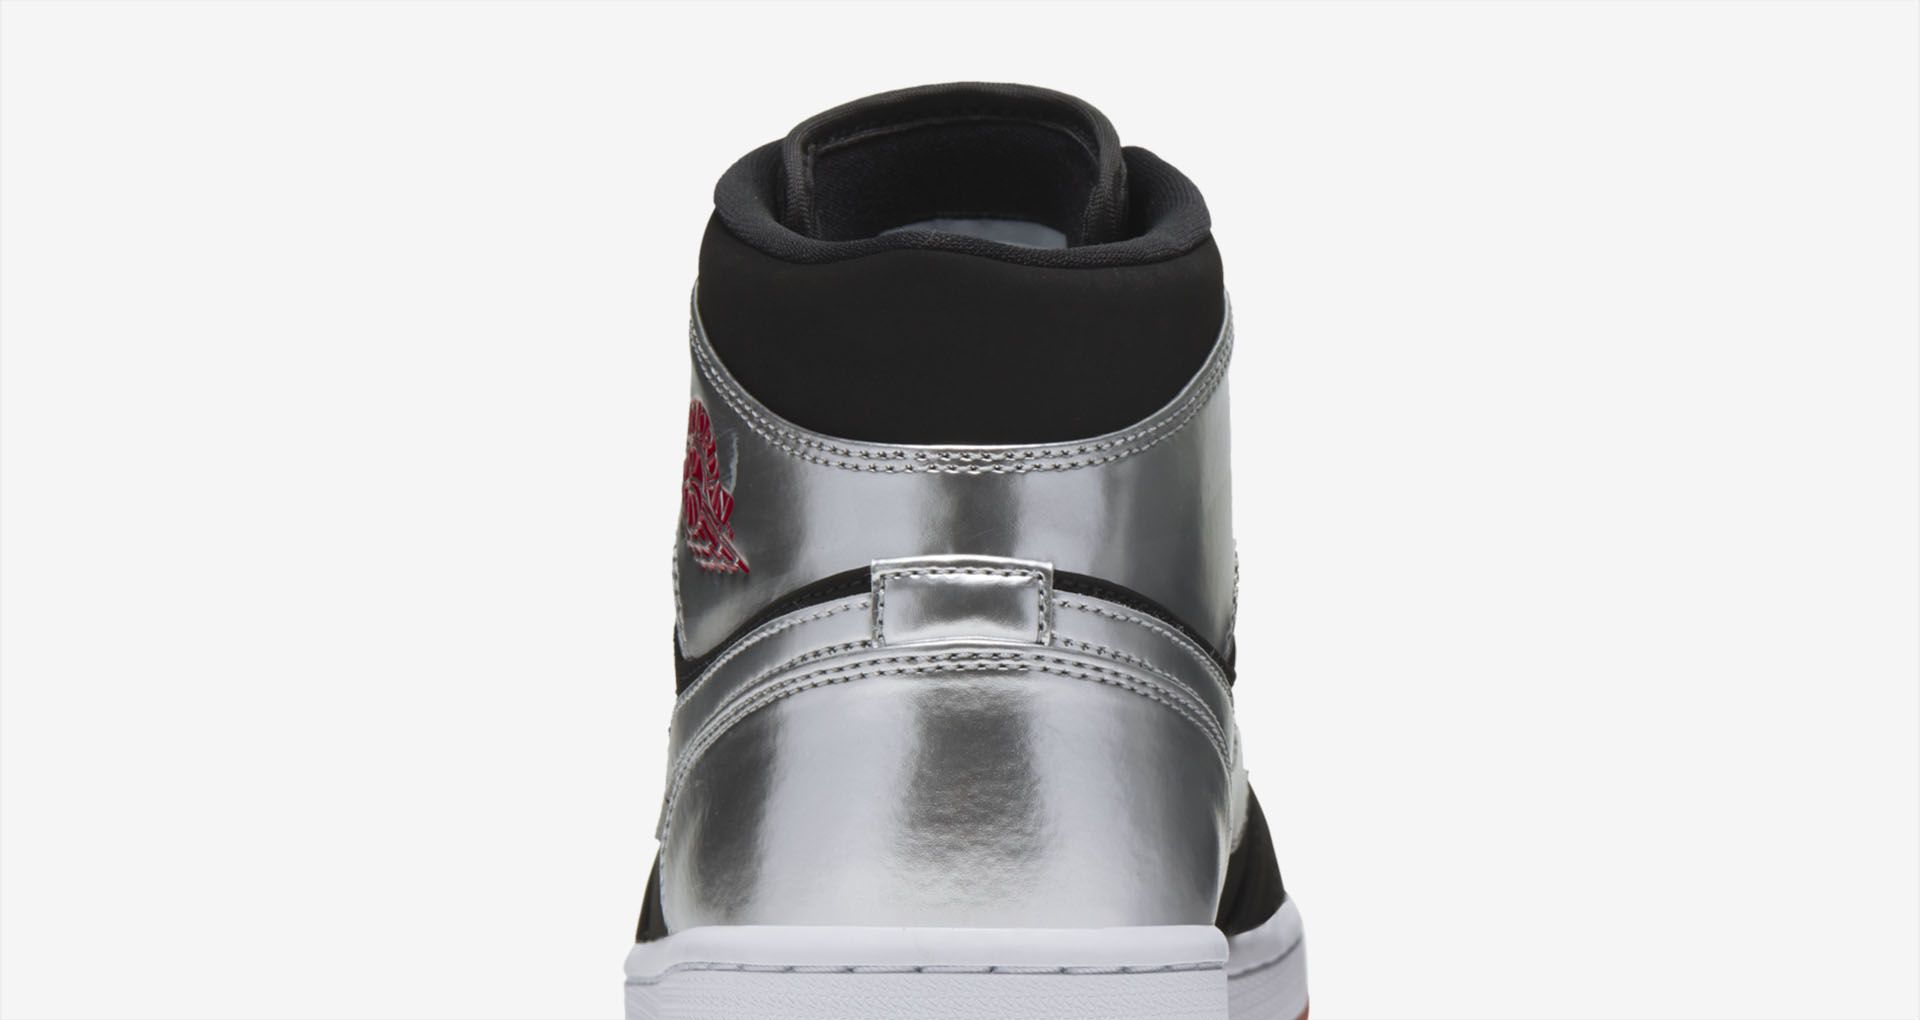 Air Jordan 1 Mid 'Black and Metallic Silver' Release Date. Nike SNKRS ID